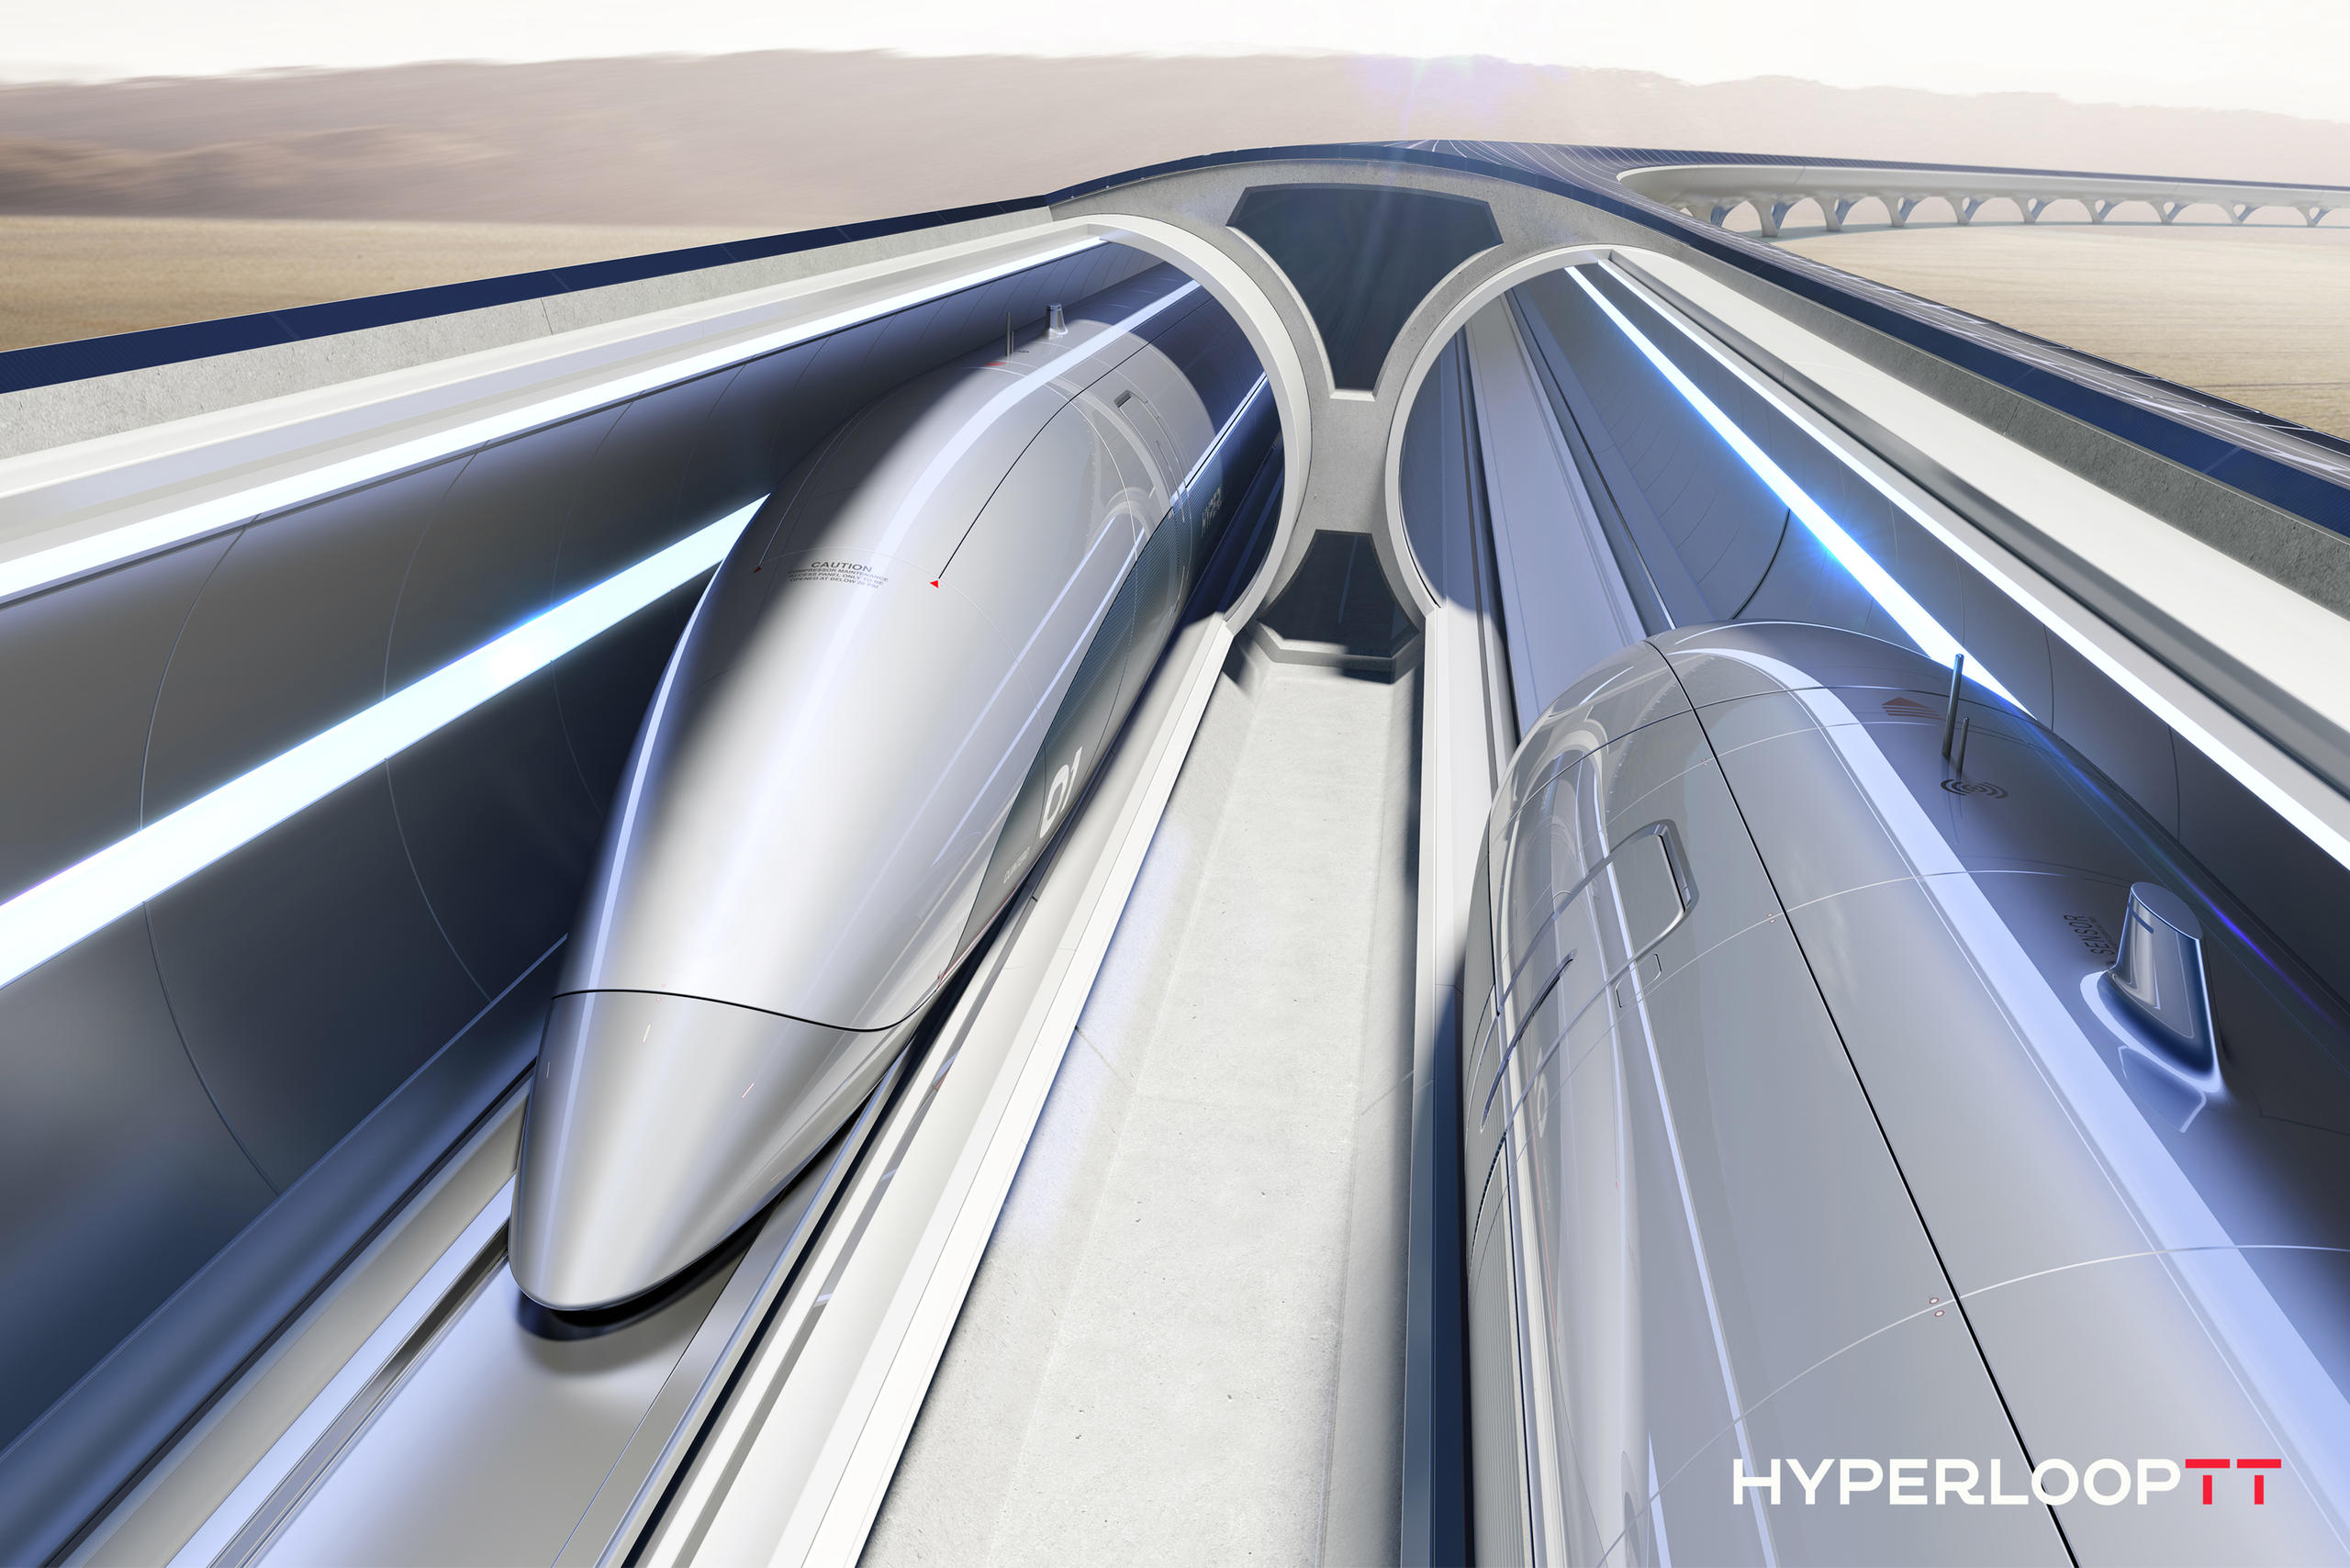 Artist s rendering of the HyperloopTT tubes and capsules